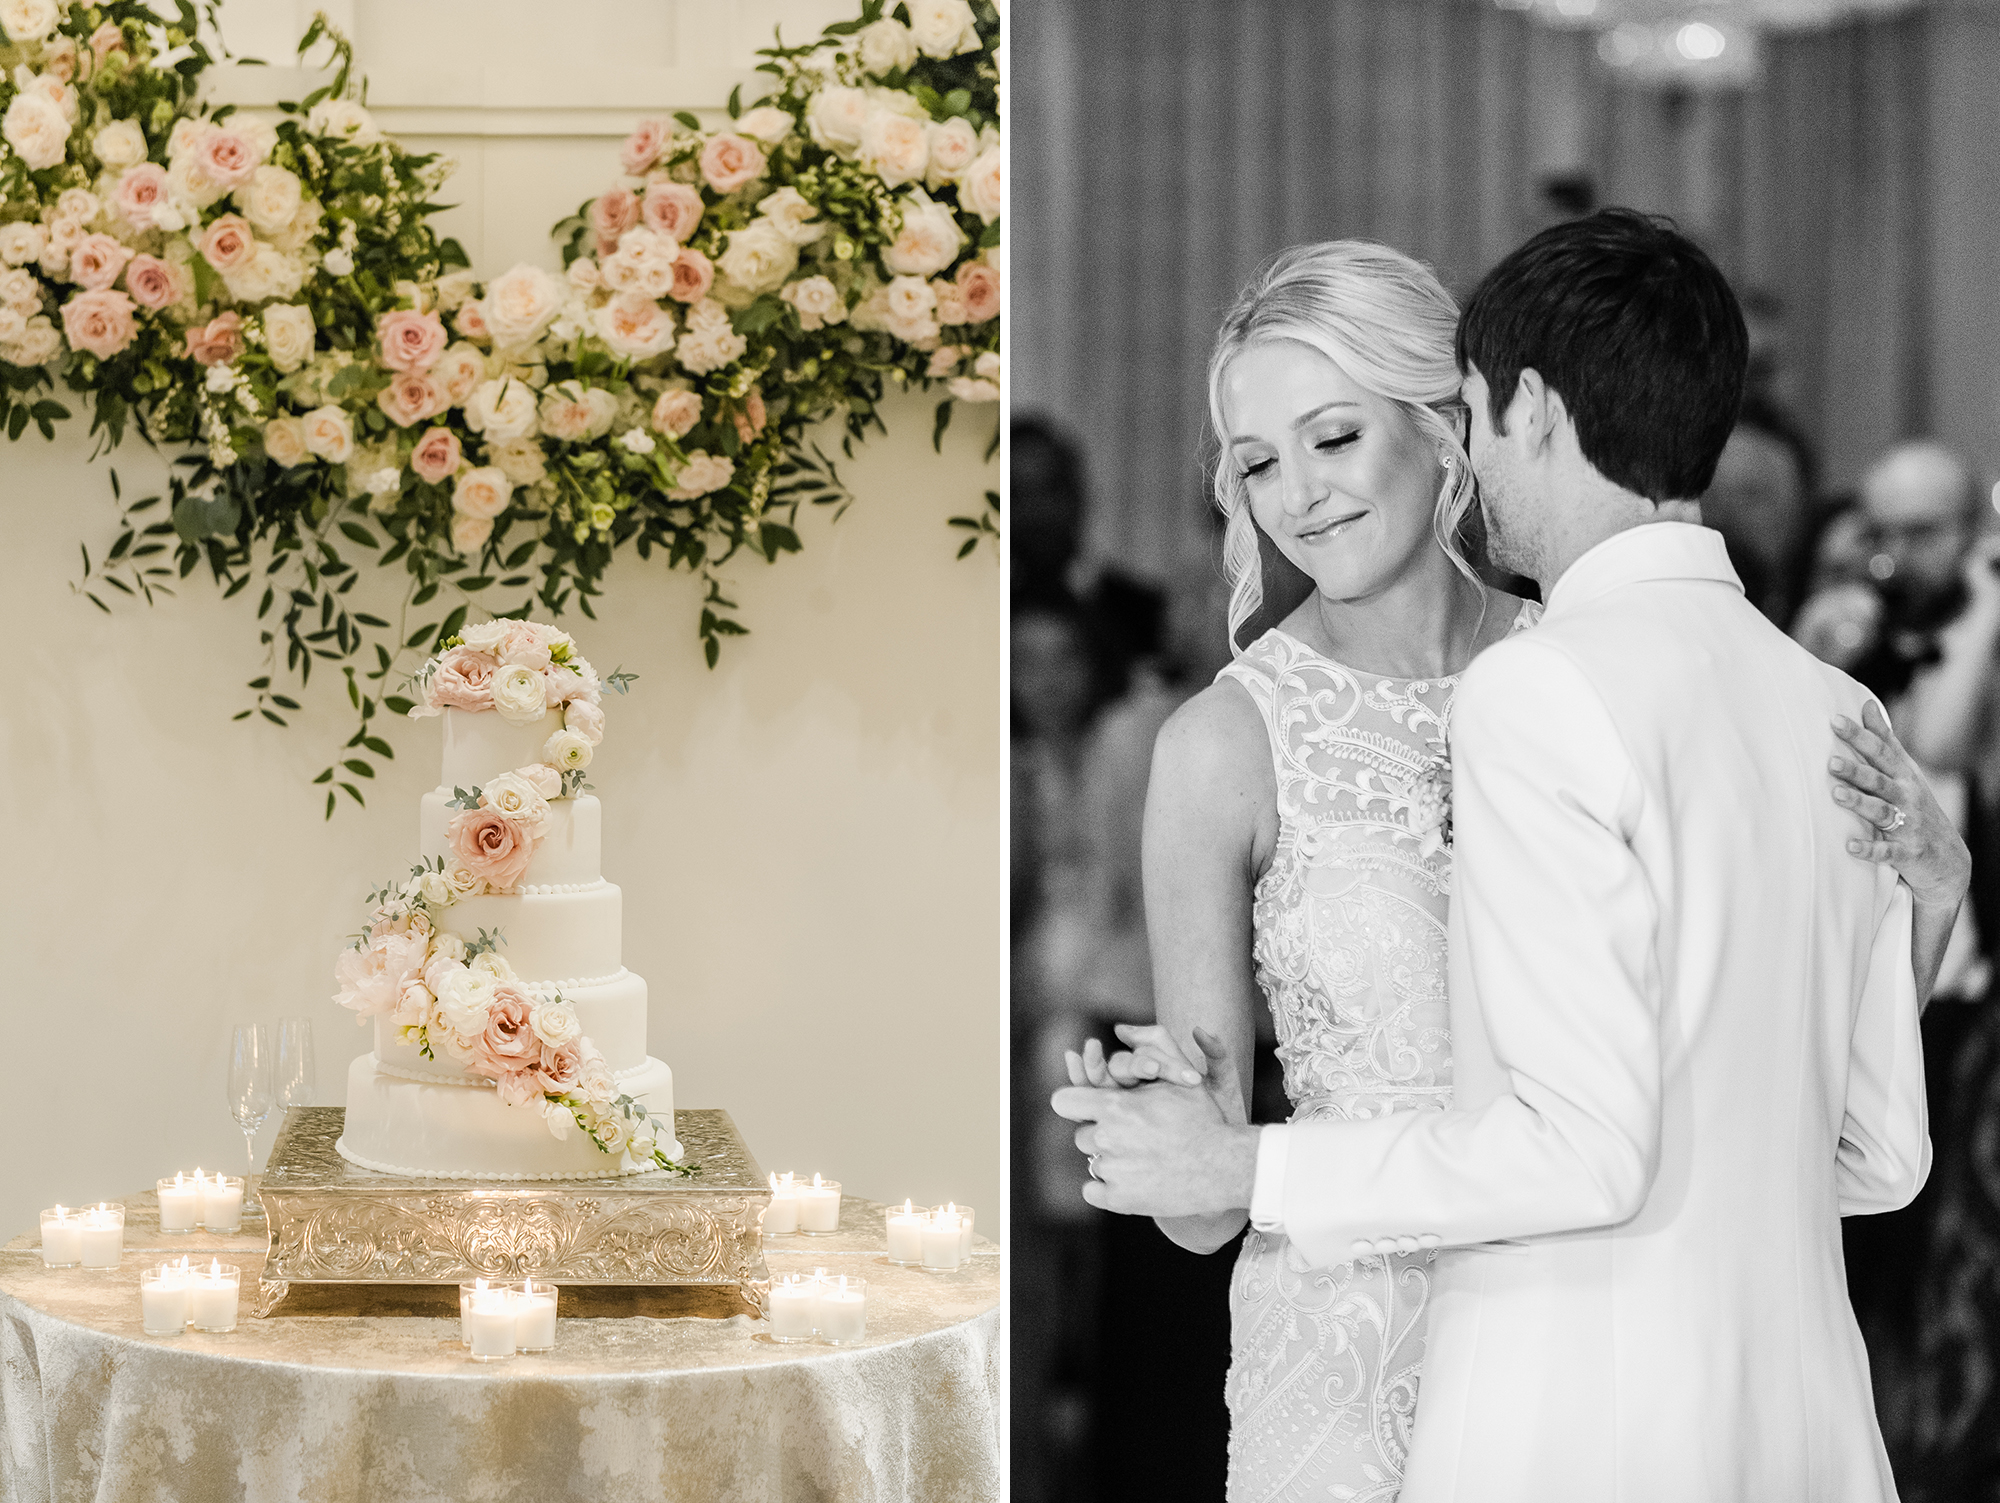 Wedding cake; Bride and groom dancing at reception